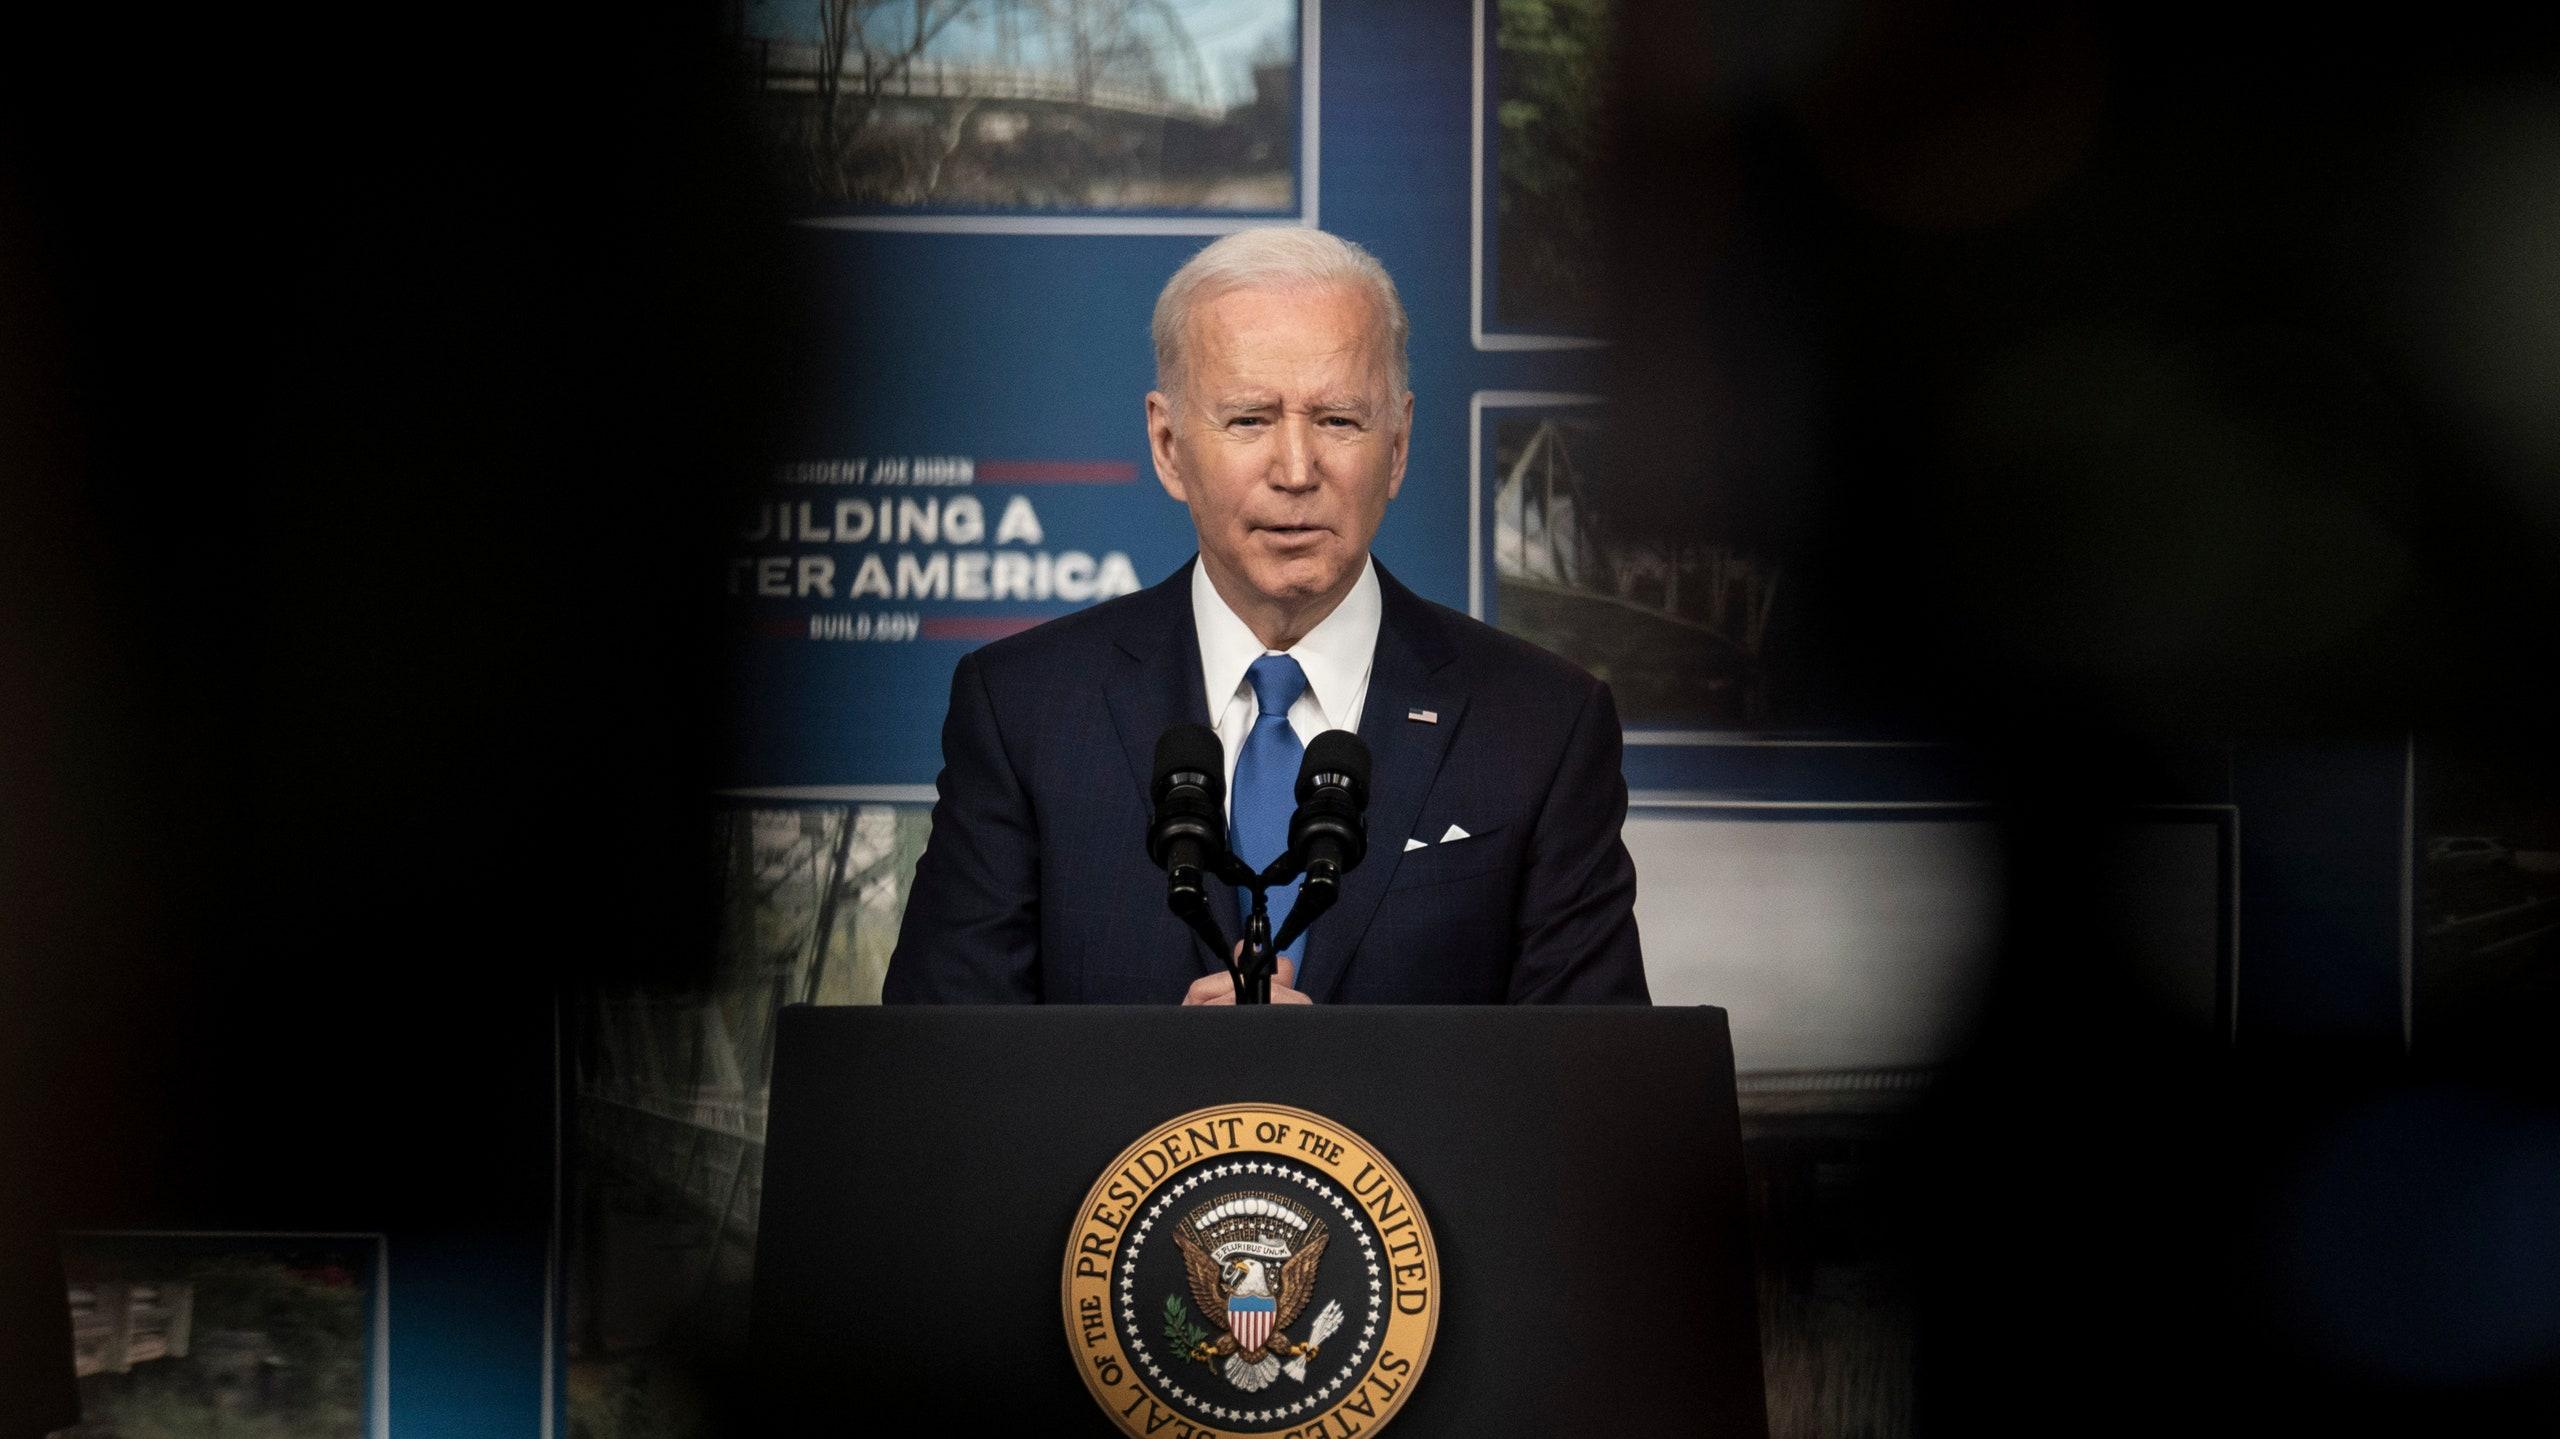 Biden S Inauguration Anniversary Has He Kept His Campaign